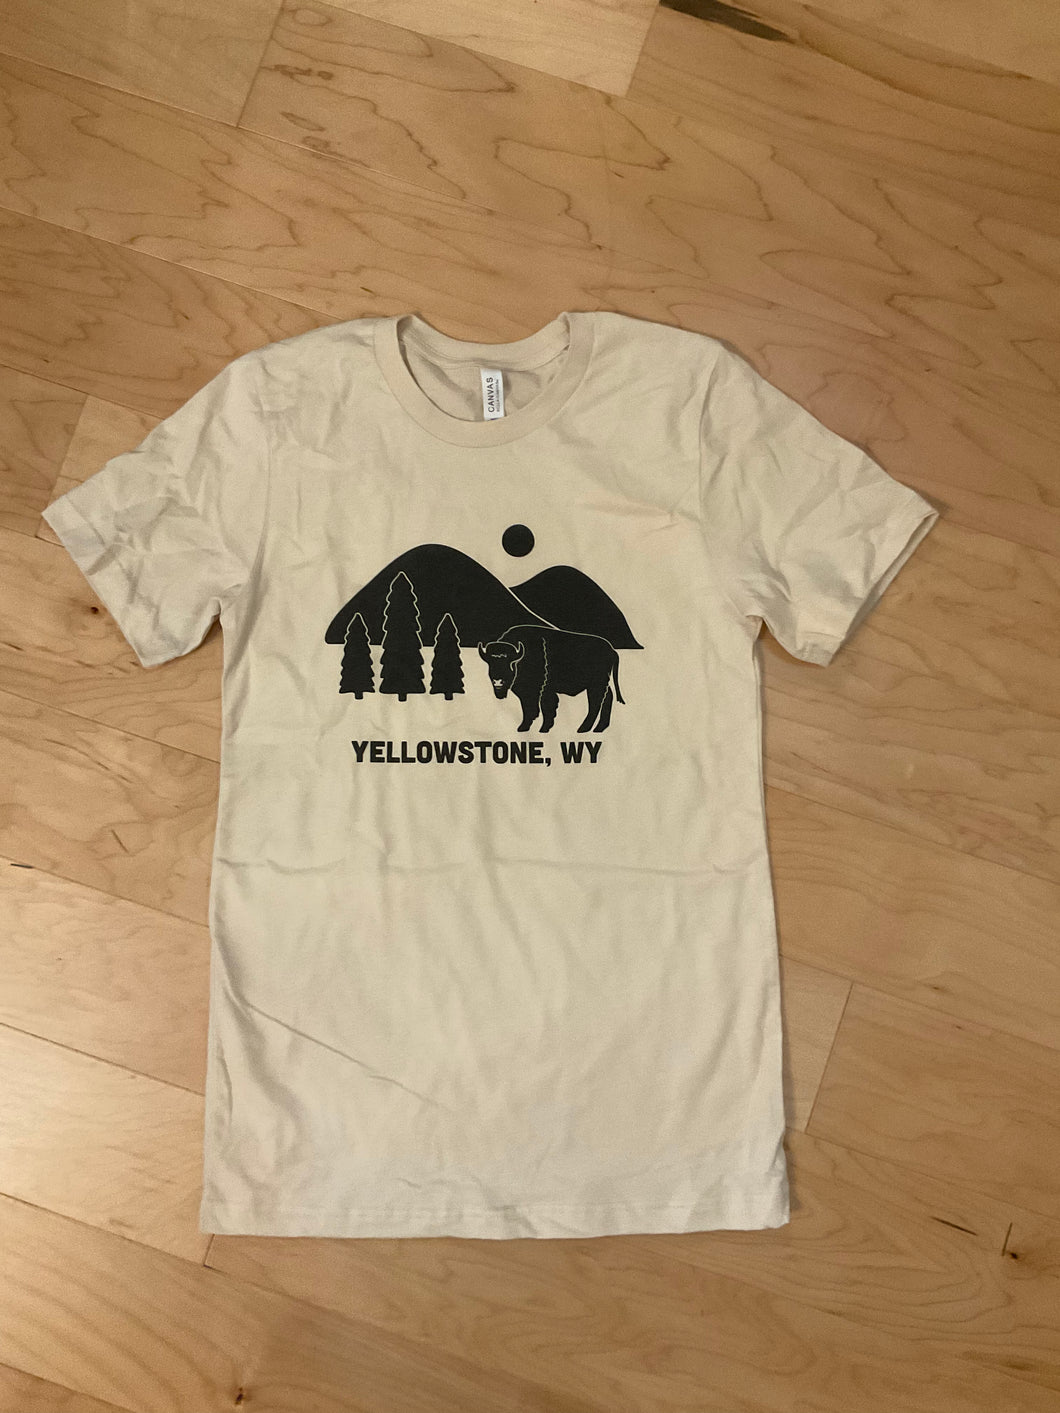 Yellowstone National Park tee shirt